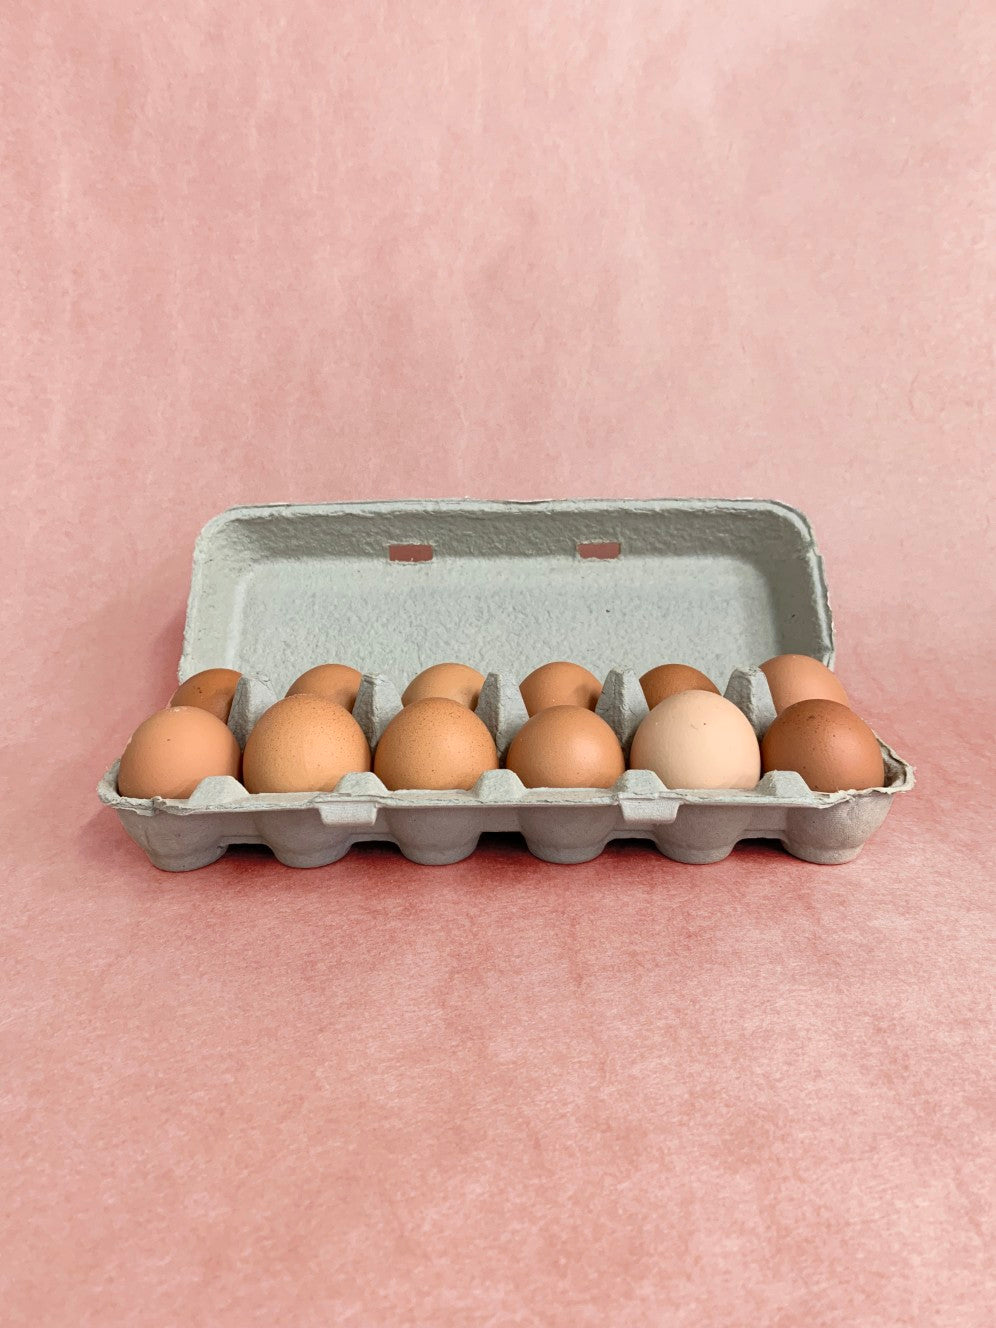 Eggs, by the dozen